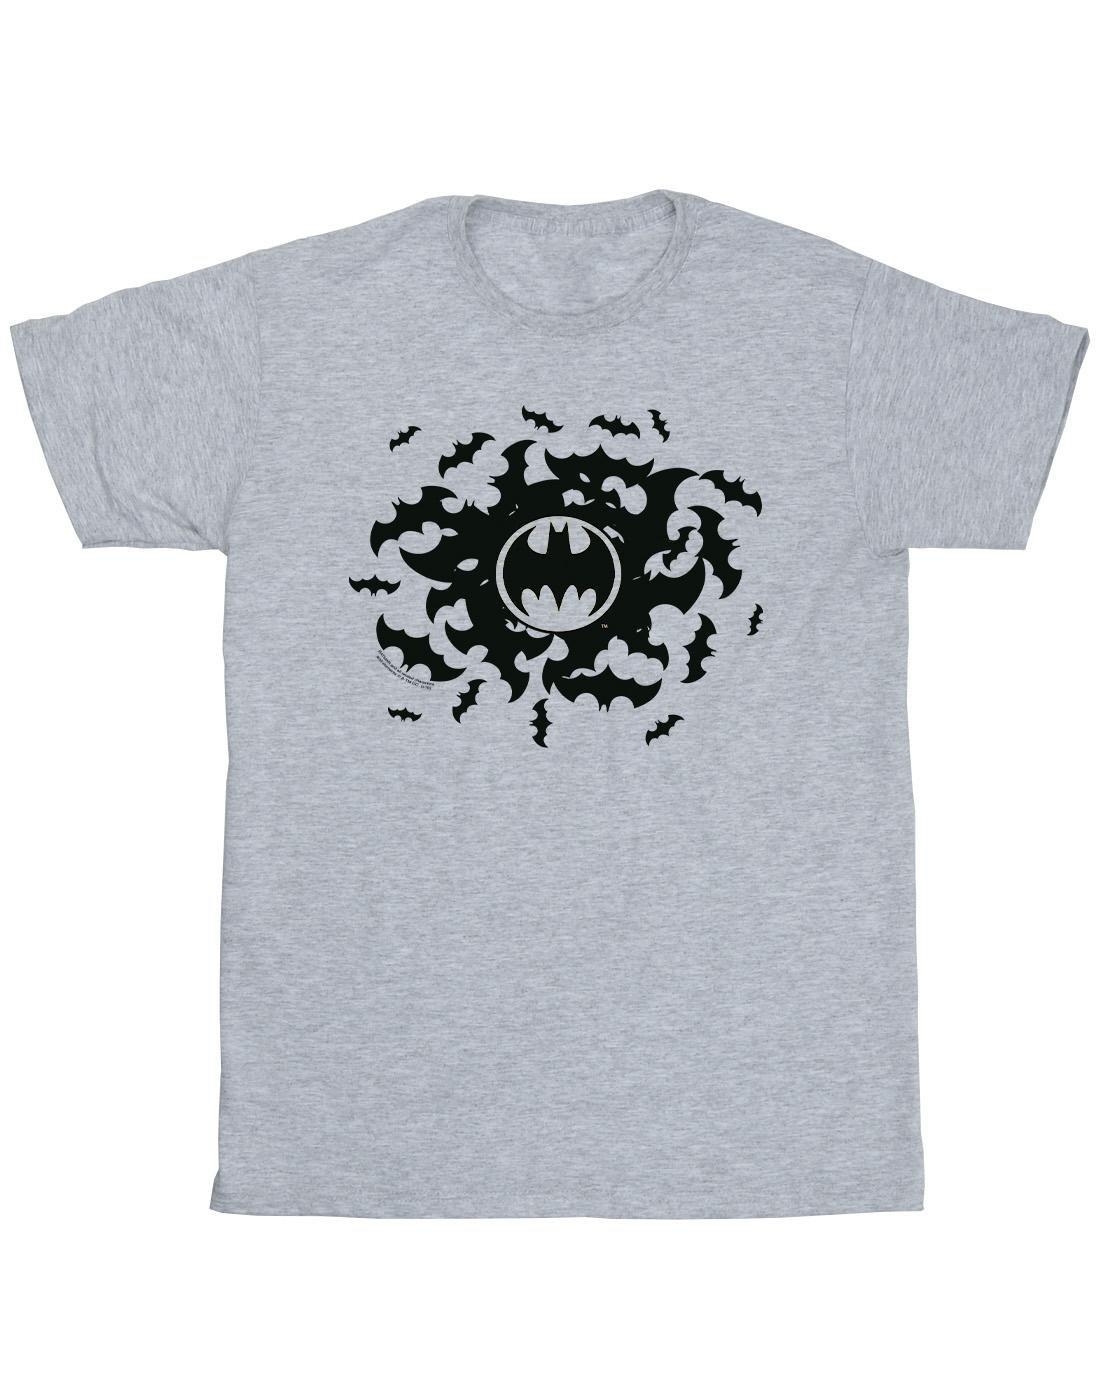 DC COMICS  Batman Bat Swirl TShirt 